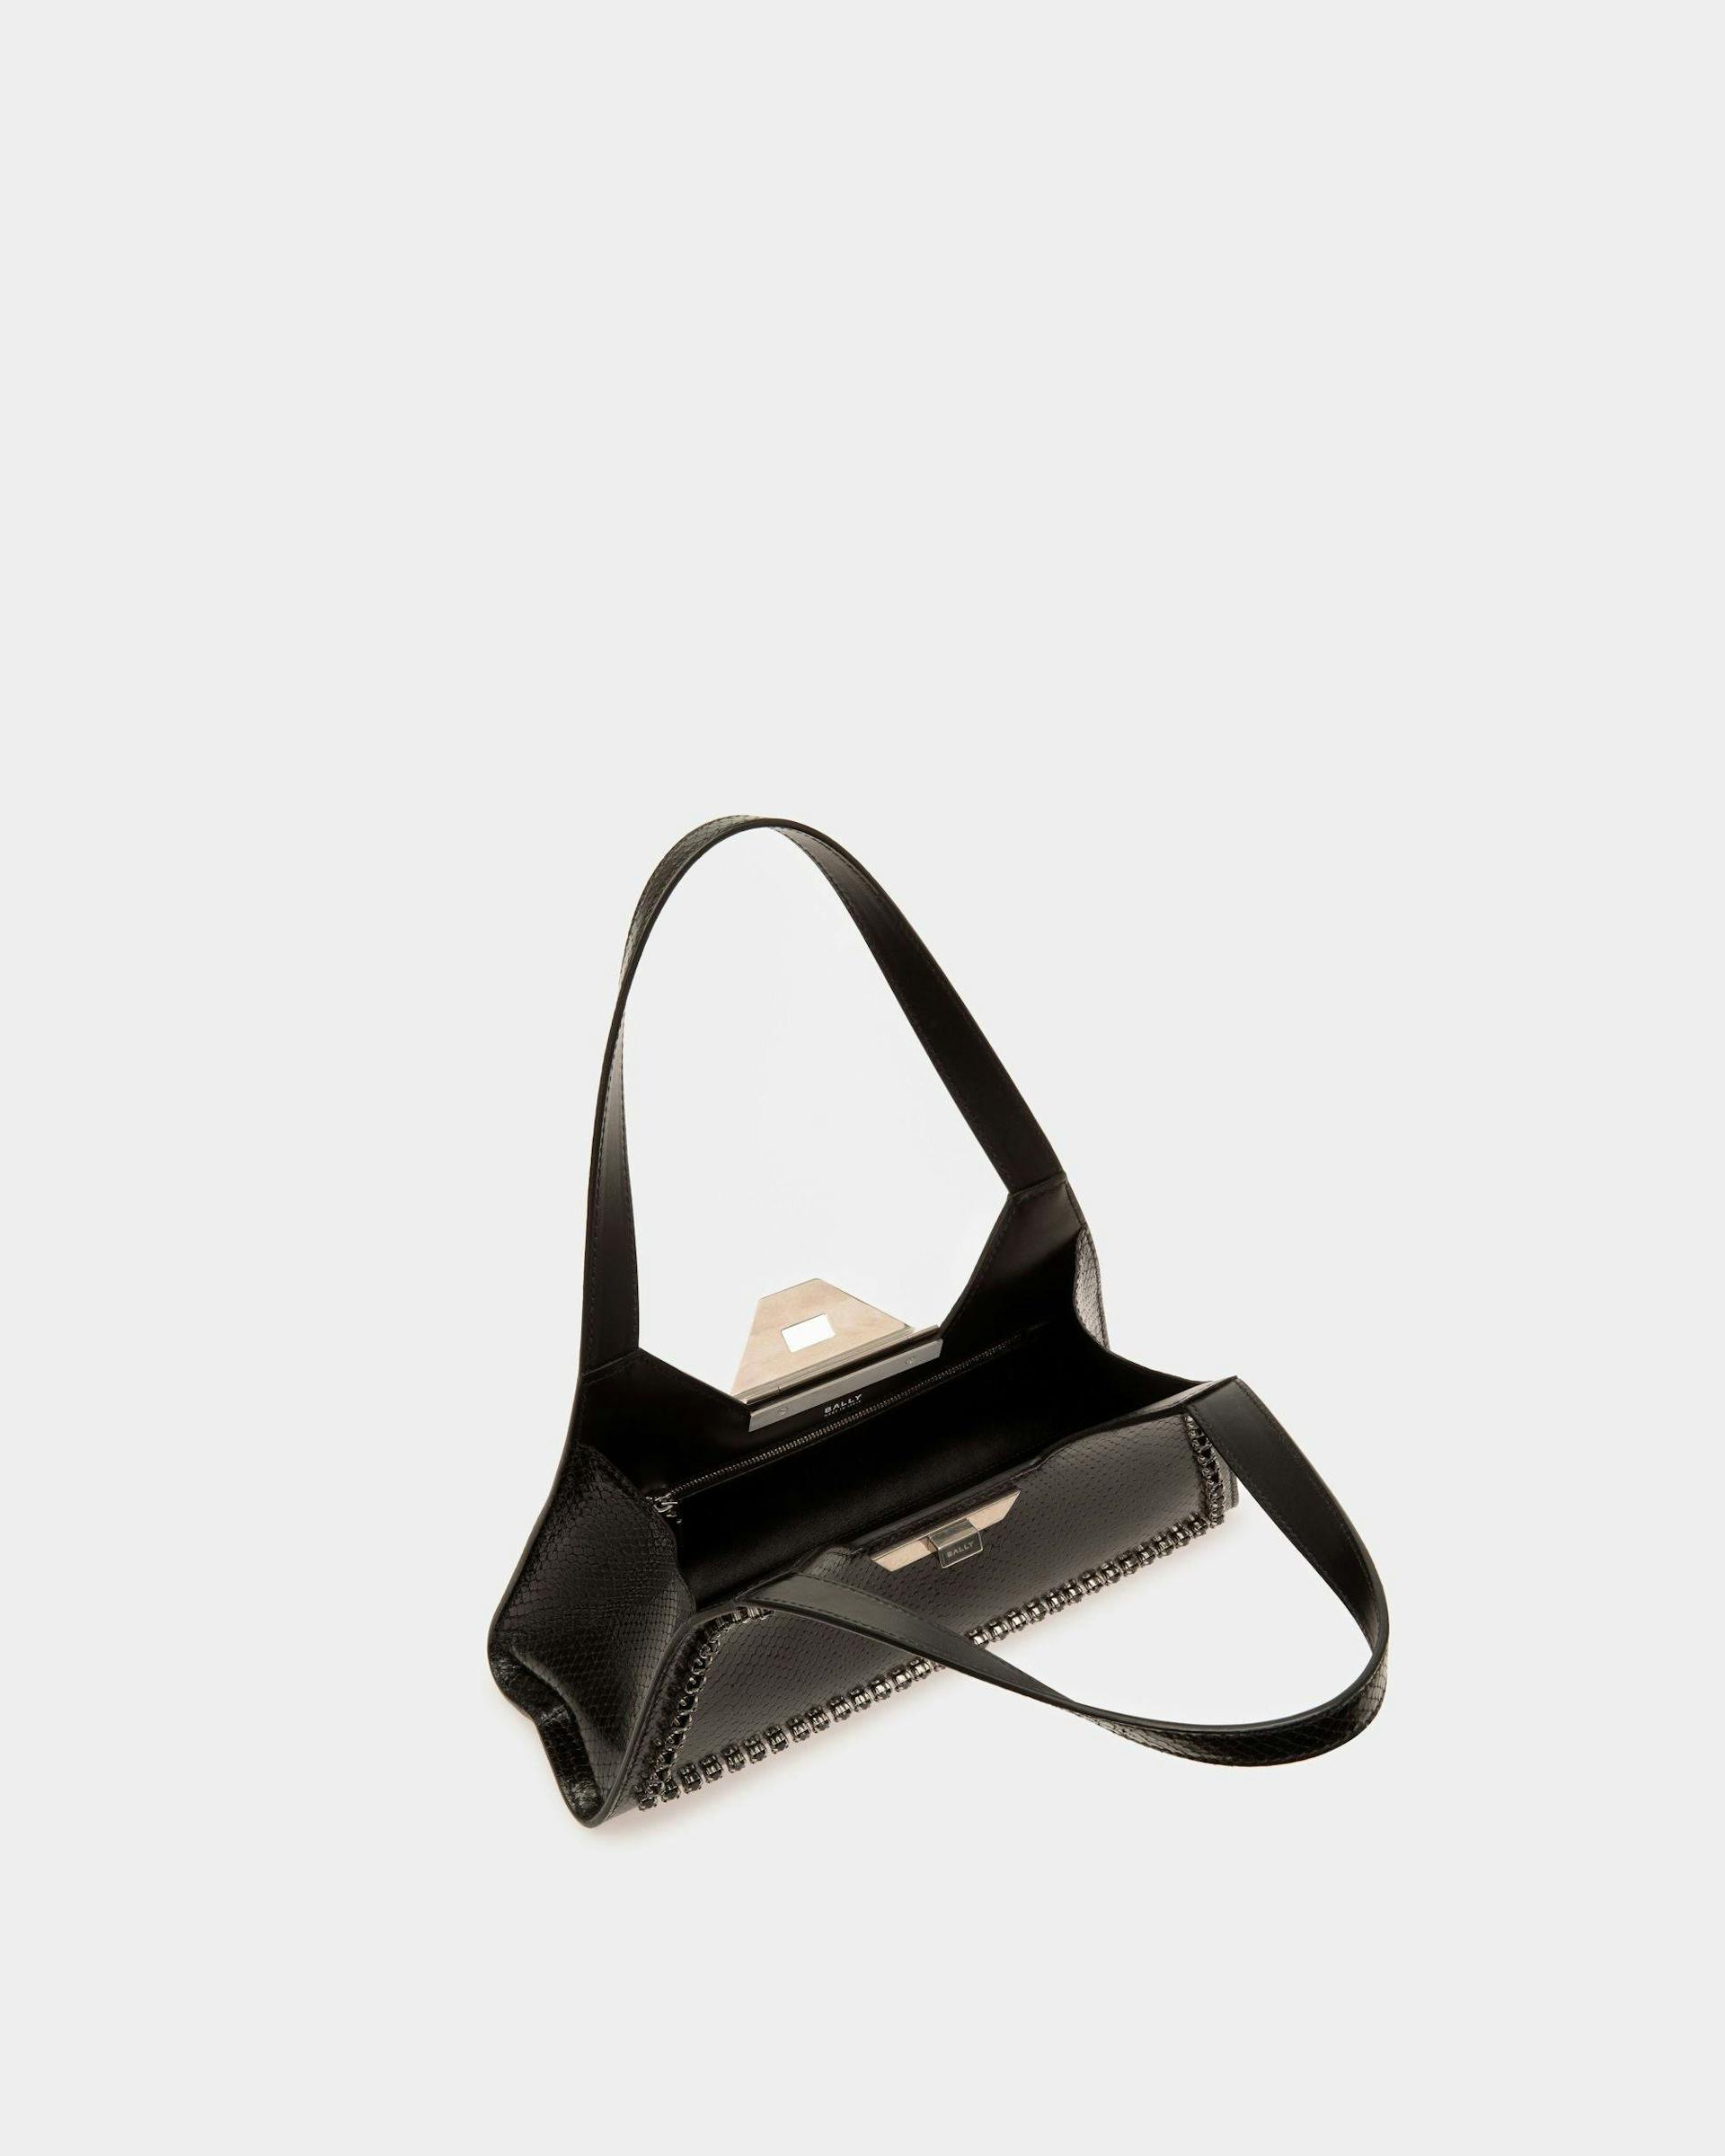 Women's Tilt Small Shoulder Bag in Black Python Printed Leather | Bally | Still Life Open / Inside